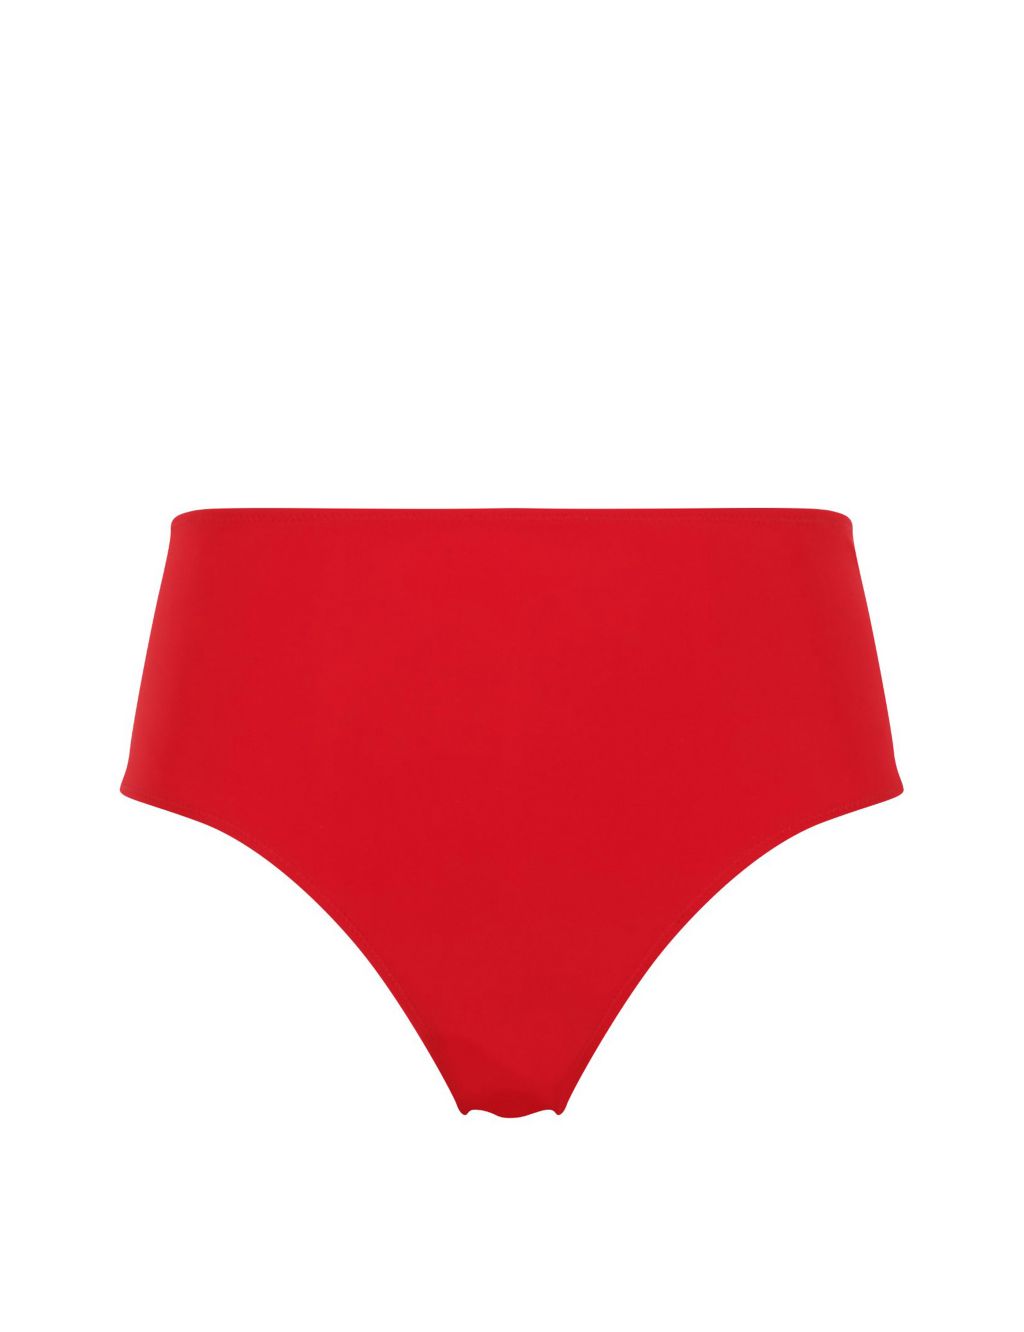 Rossa High Waisted Bikini Bottoms image 2